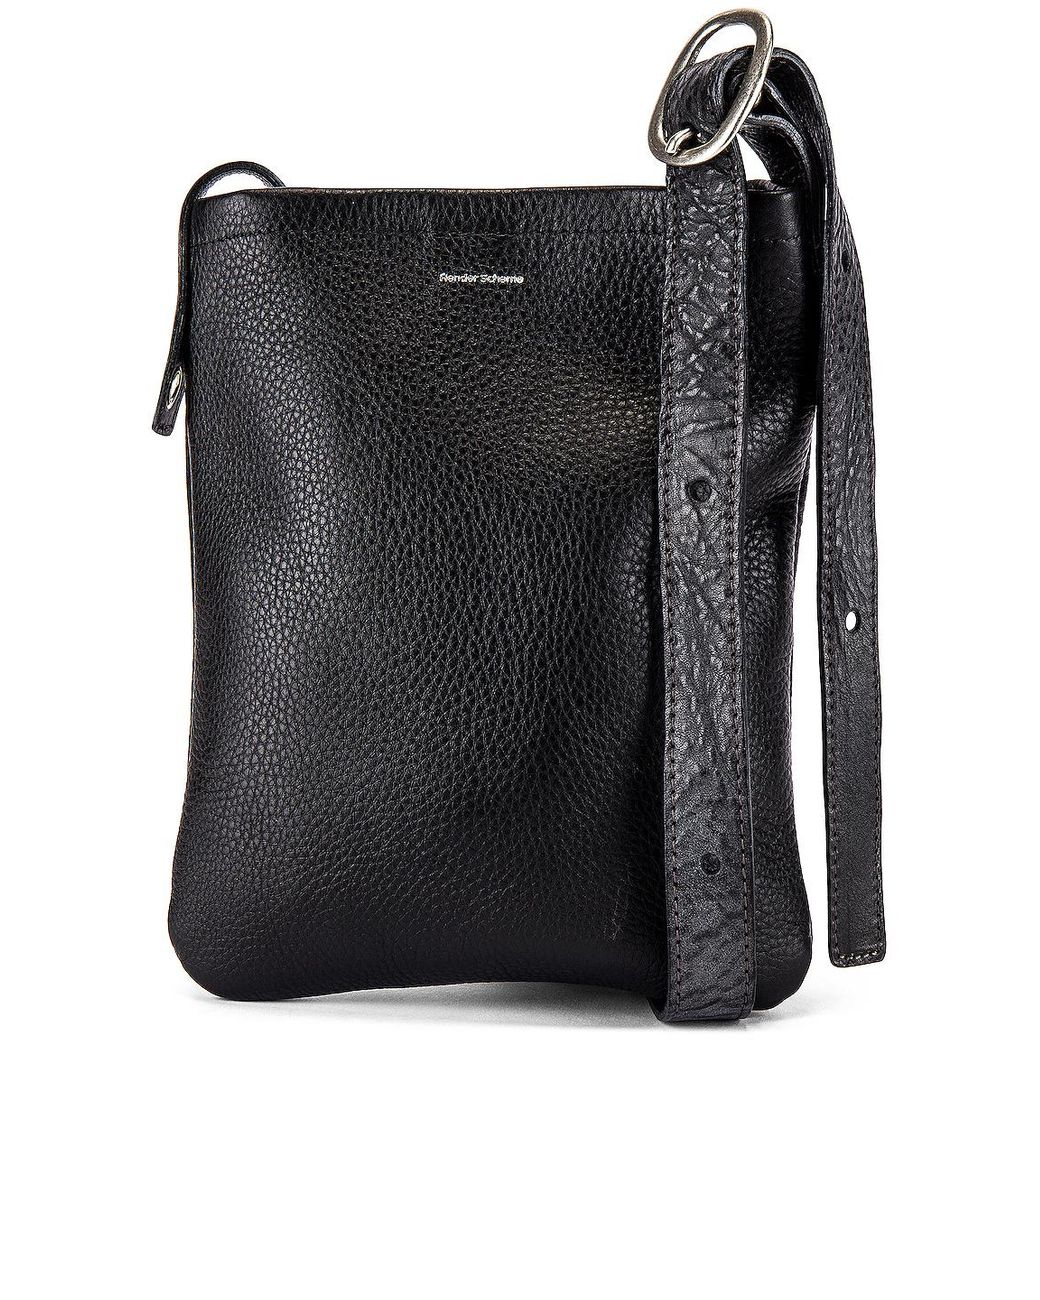 Hender Scheme Men's Black Leather One Side Belt Bag Small